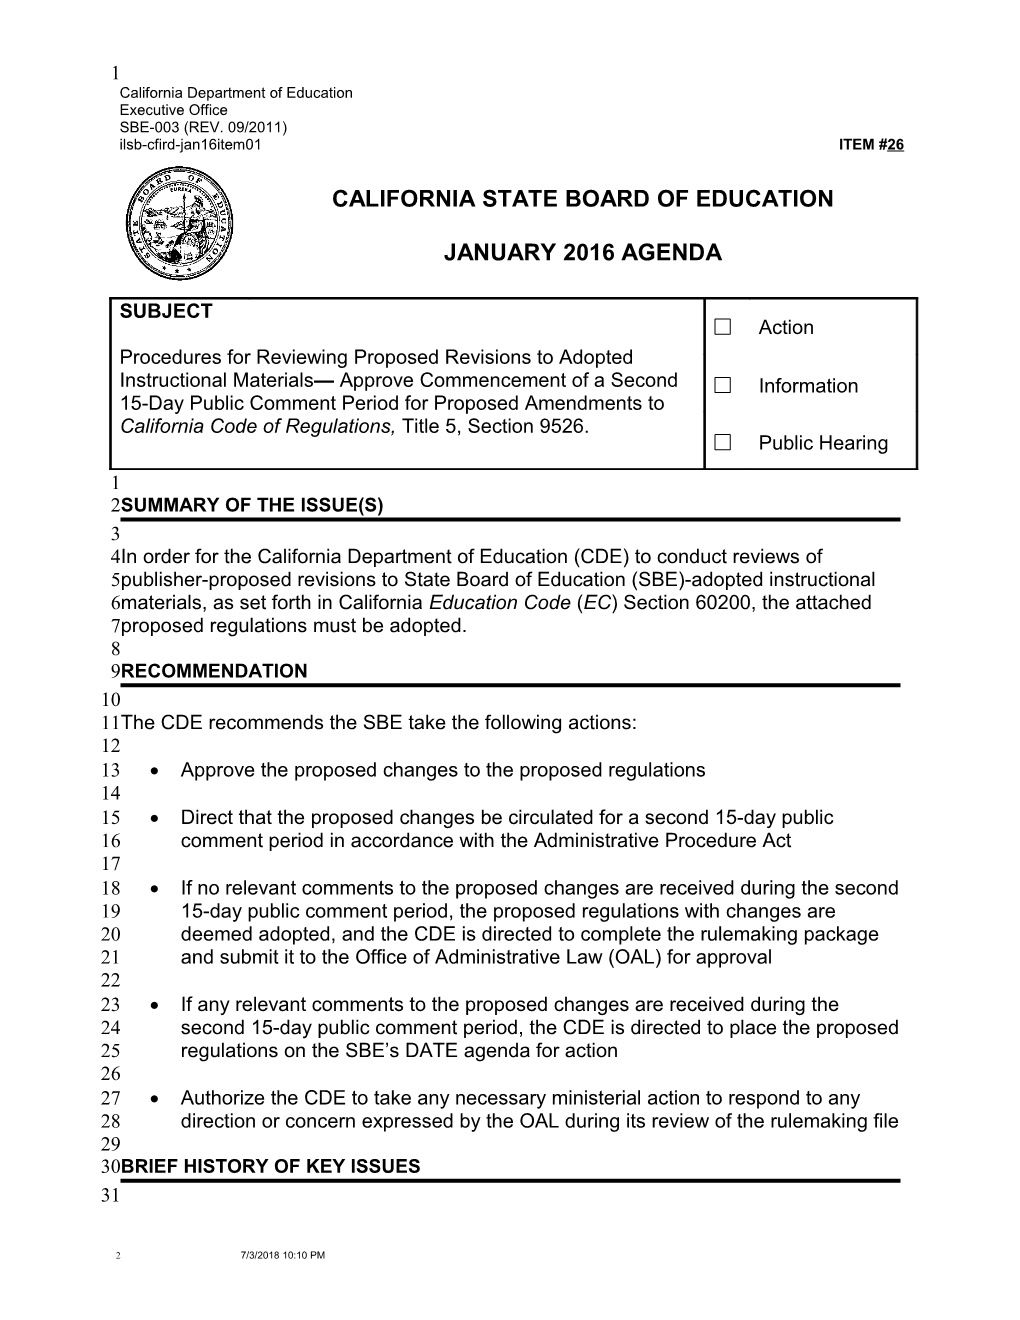 January 2016 Agenda Item 26 - Meeting Agendas (CA State Board of Education)